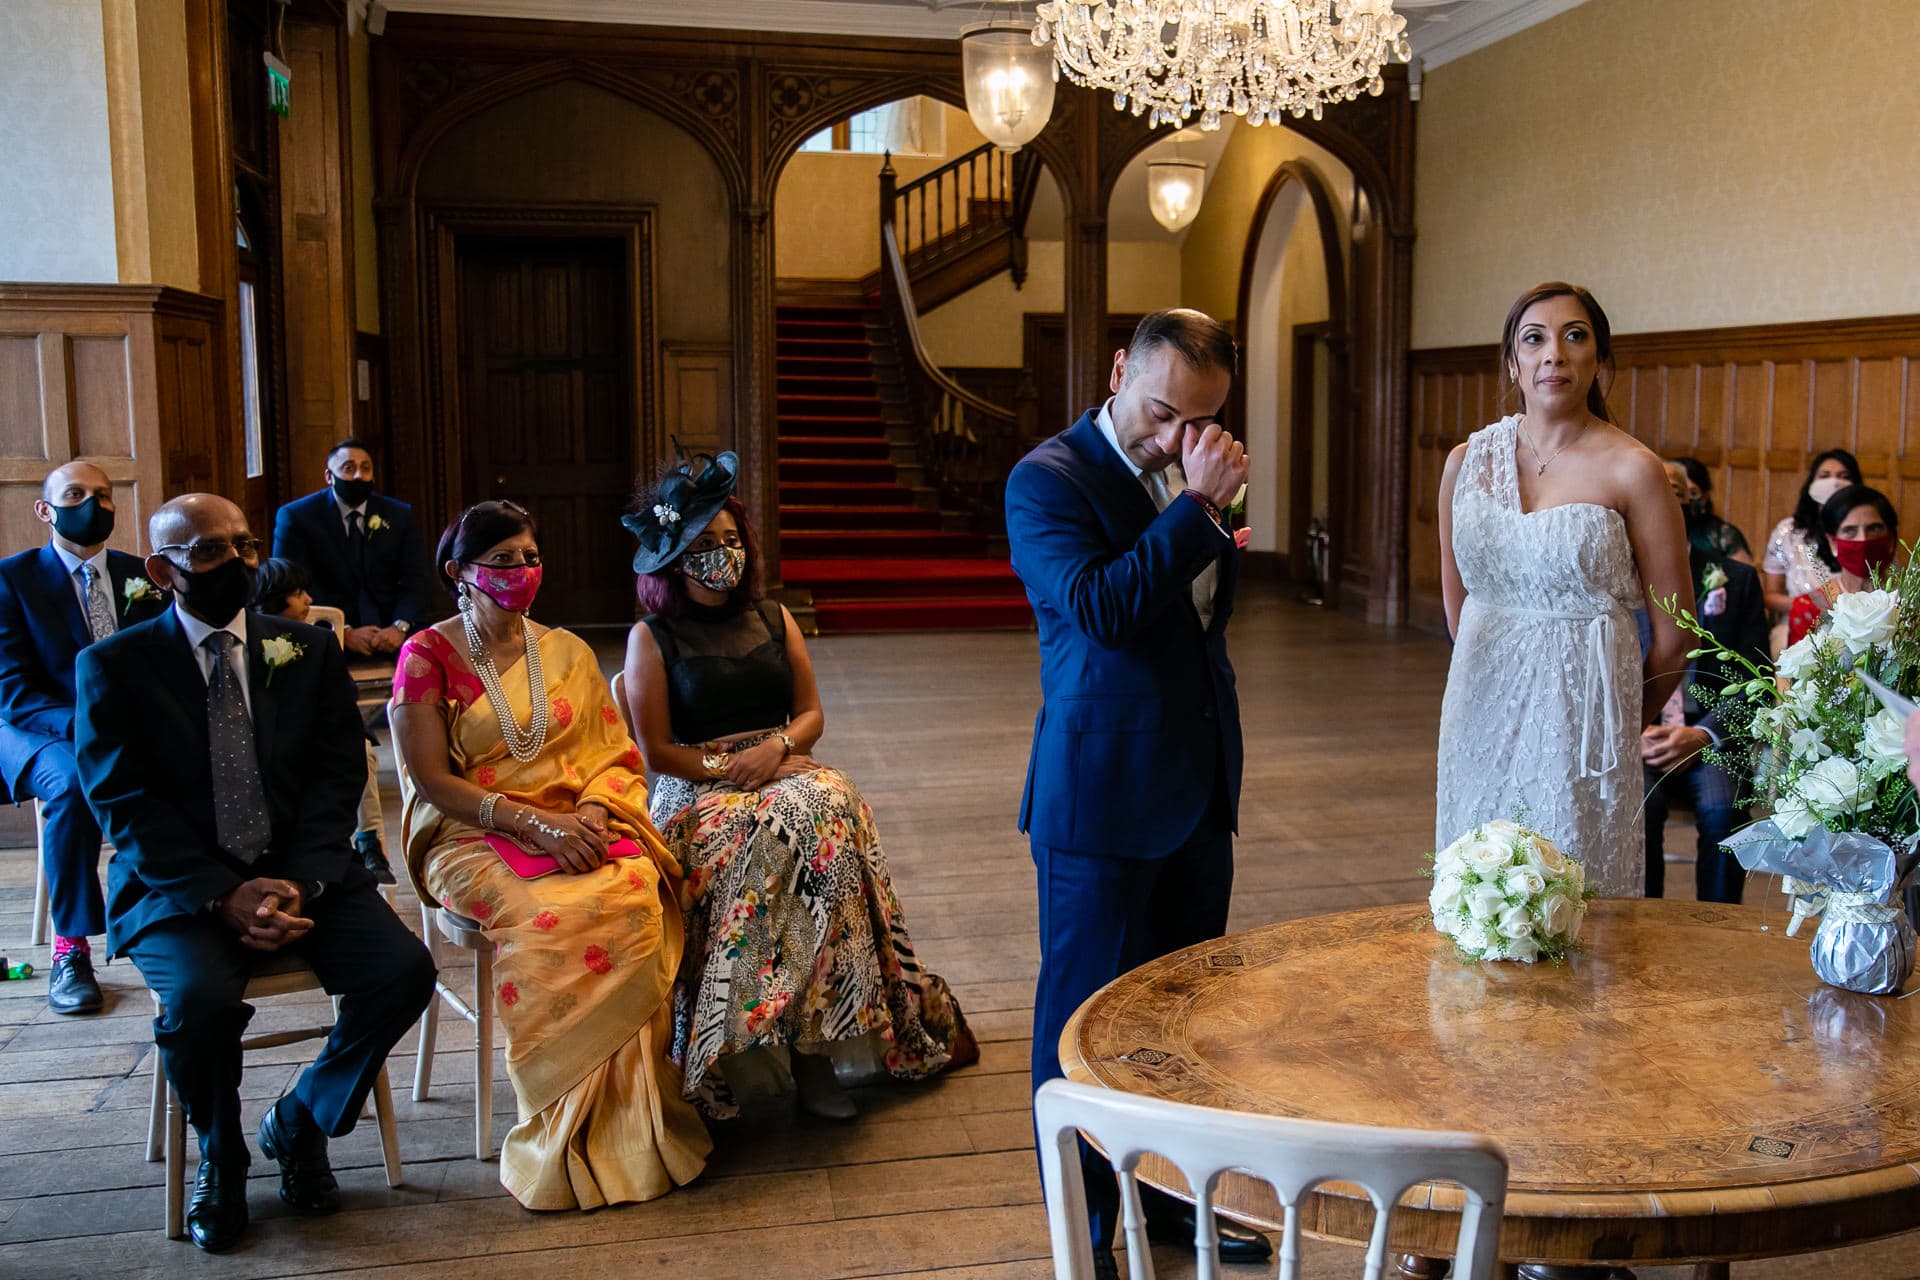 Best Asian wedding photographs of 2020